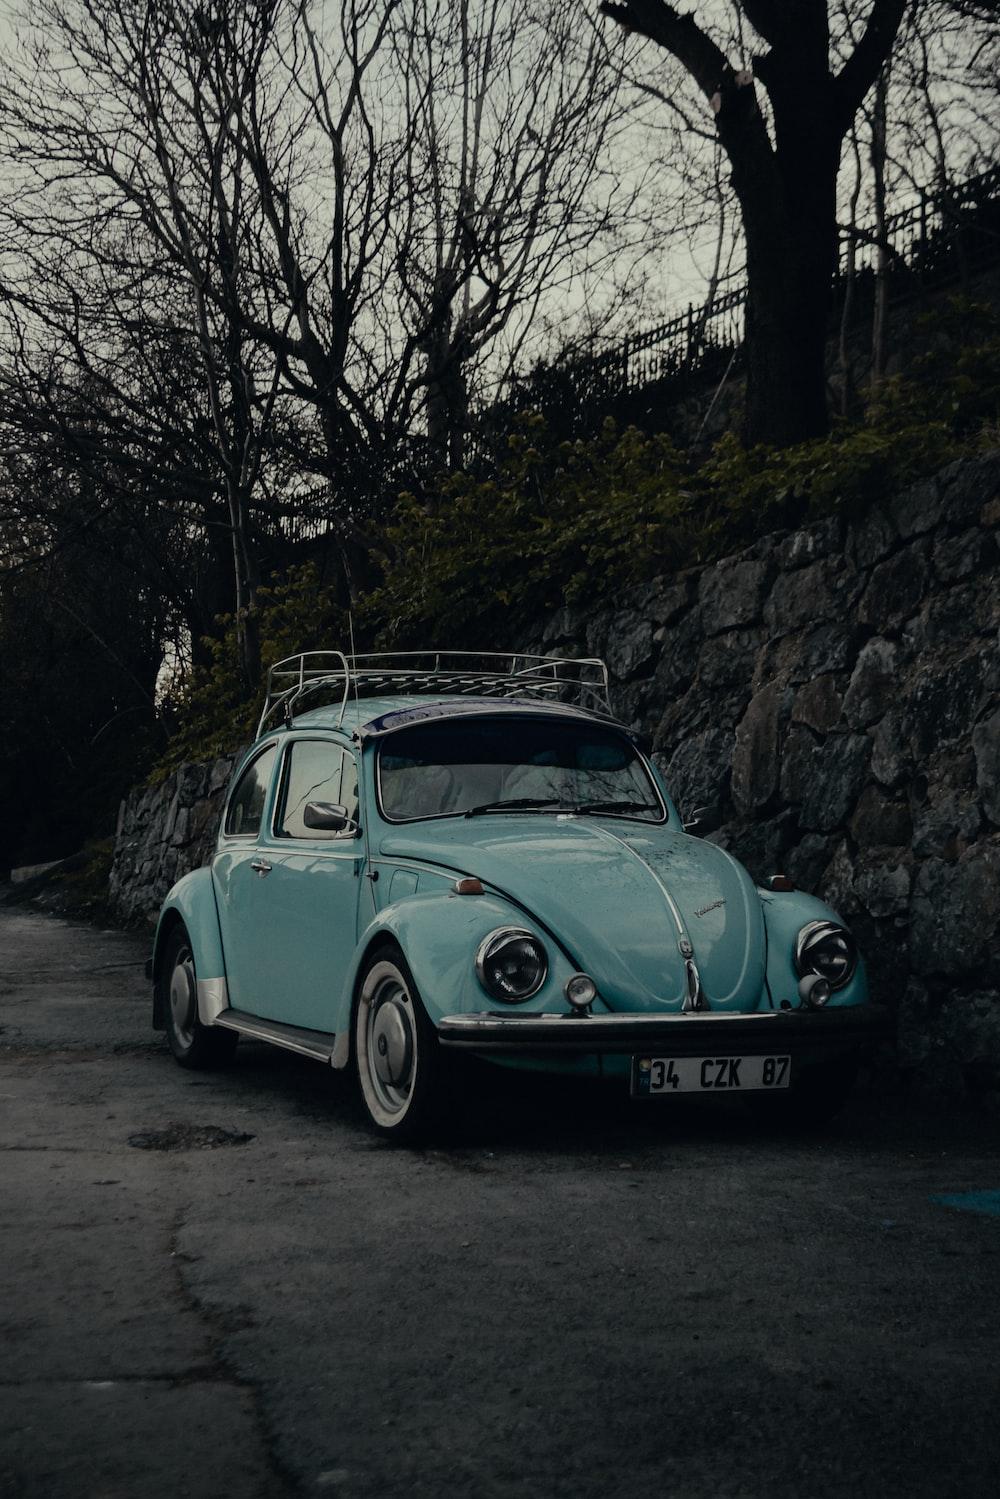 Teal Volkswagen Beetle Parked Beside Tree Photo Car Image